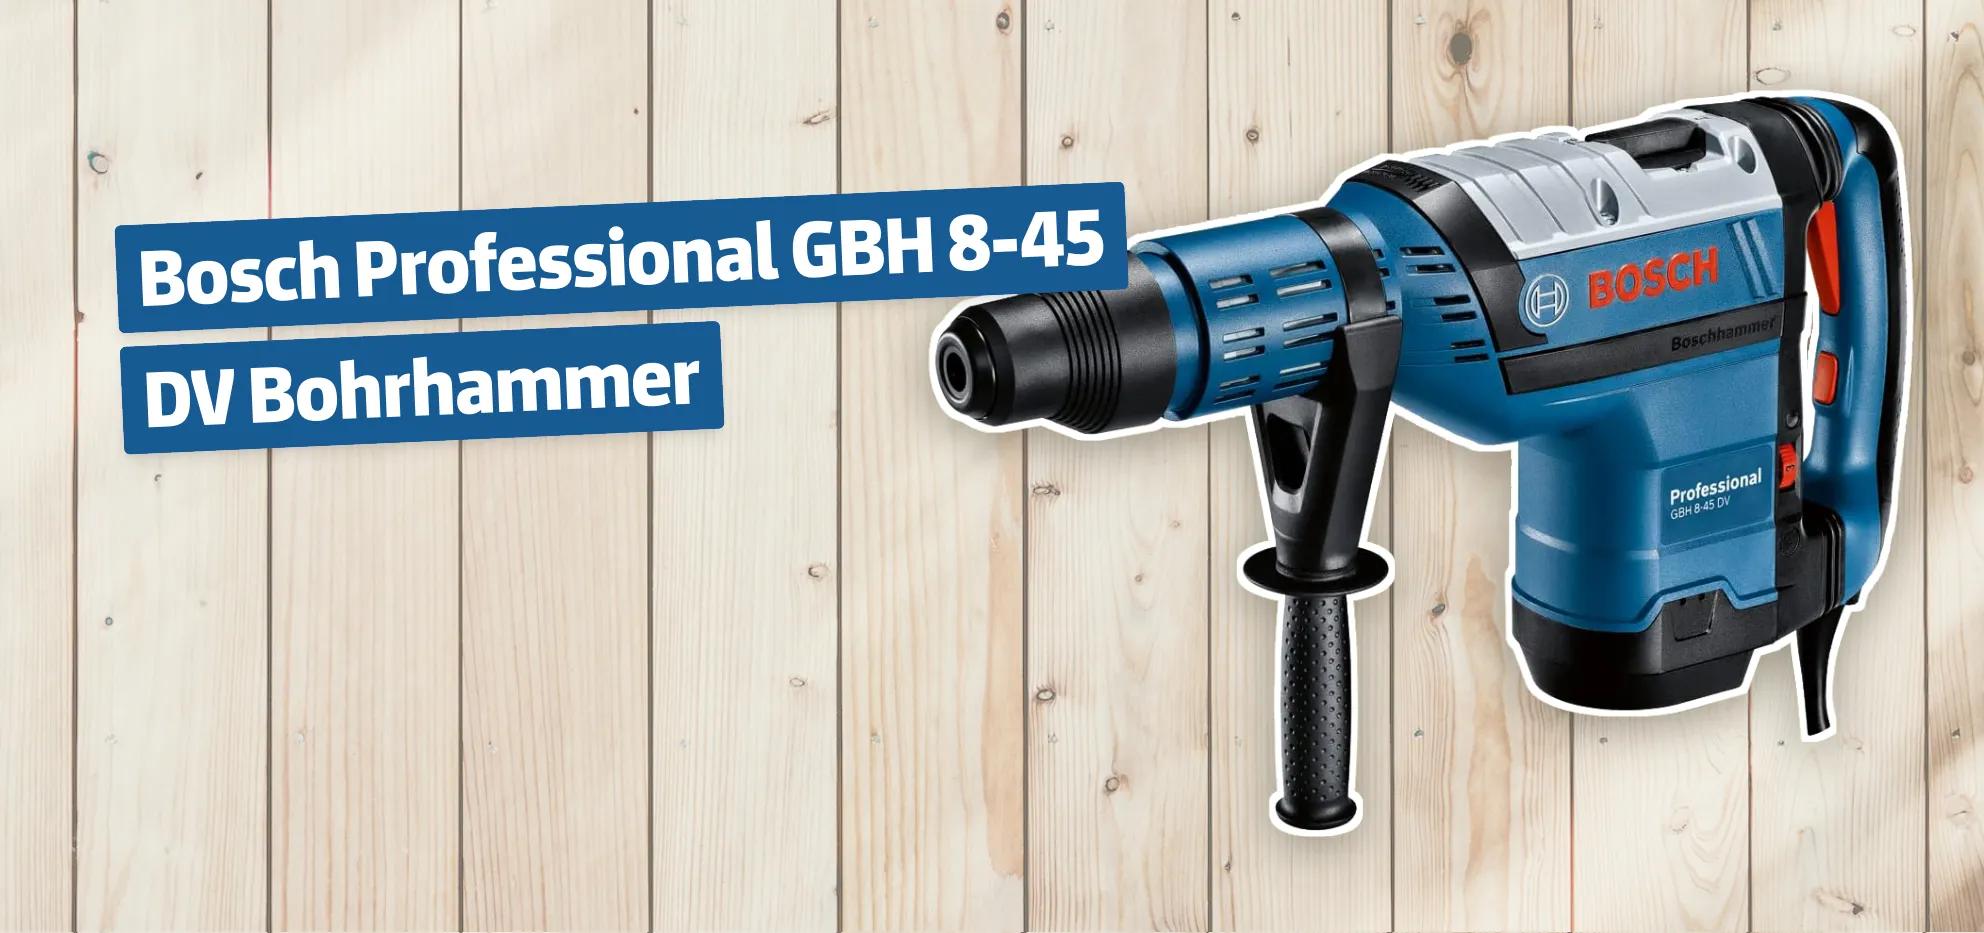 Bosch Professional GBH 8-45 DV Bohrhammer